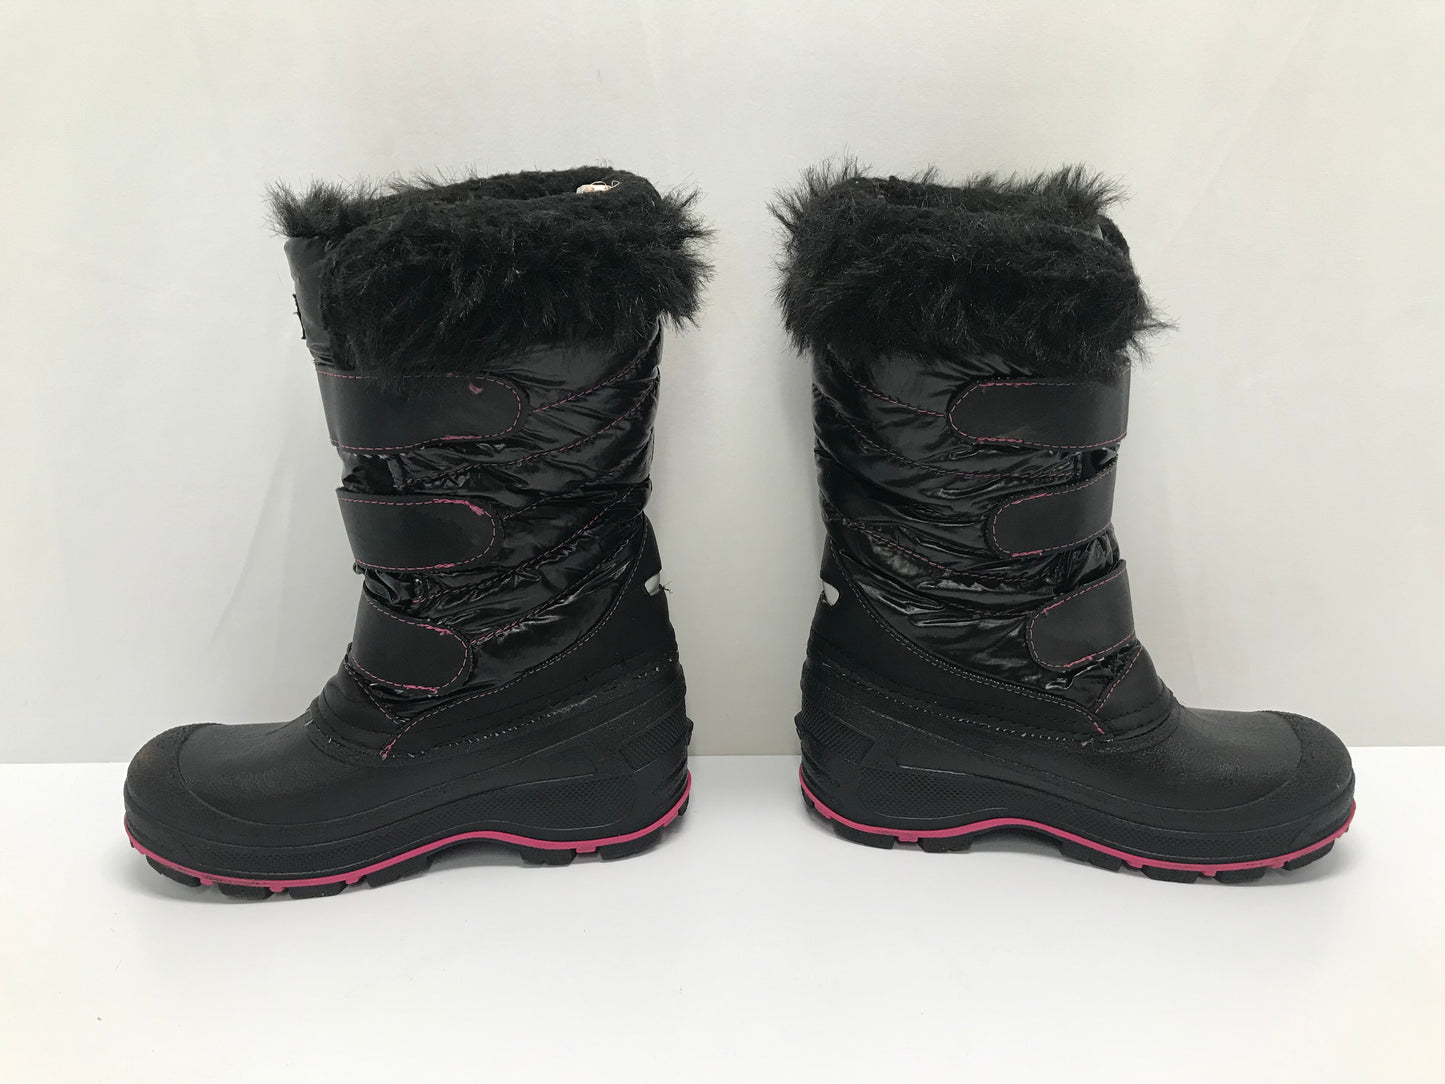 Winter Boots Child Size 3 Maple Leaf Black Pink New Demo Model